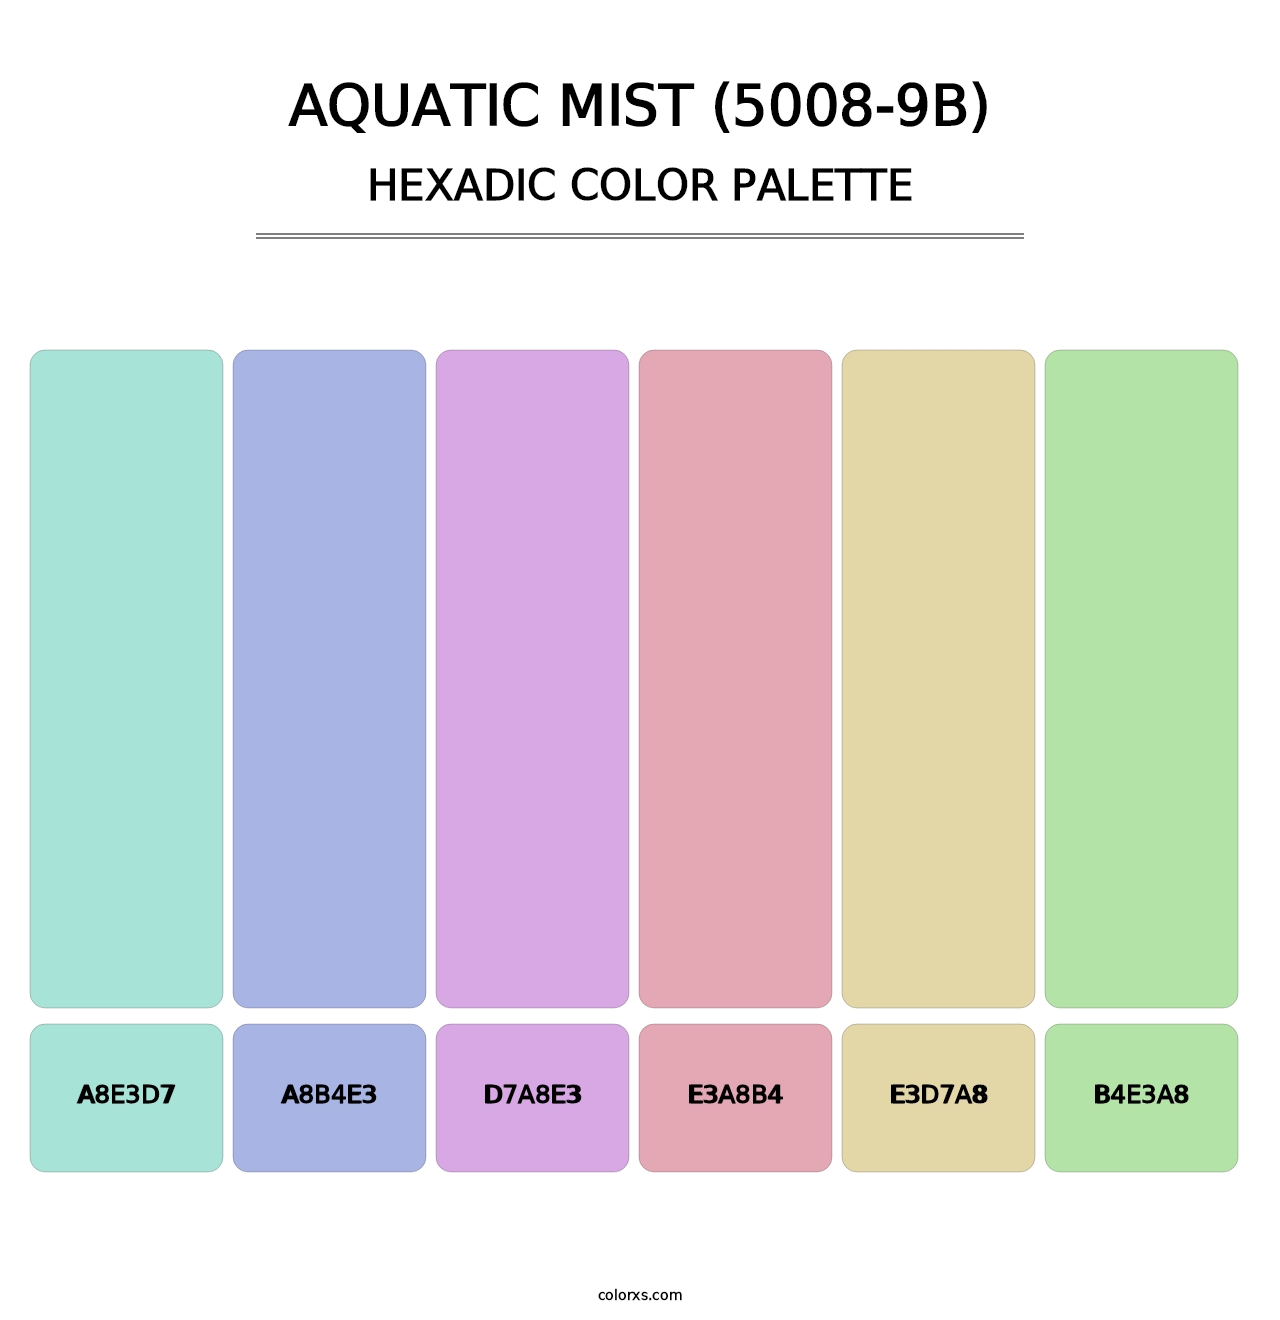 Aquatic Mist (5008-9B) - Hexadic Color Palette